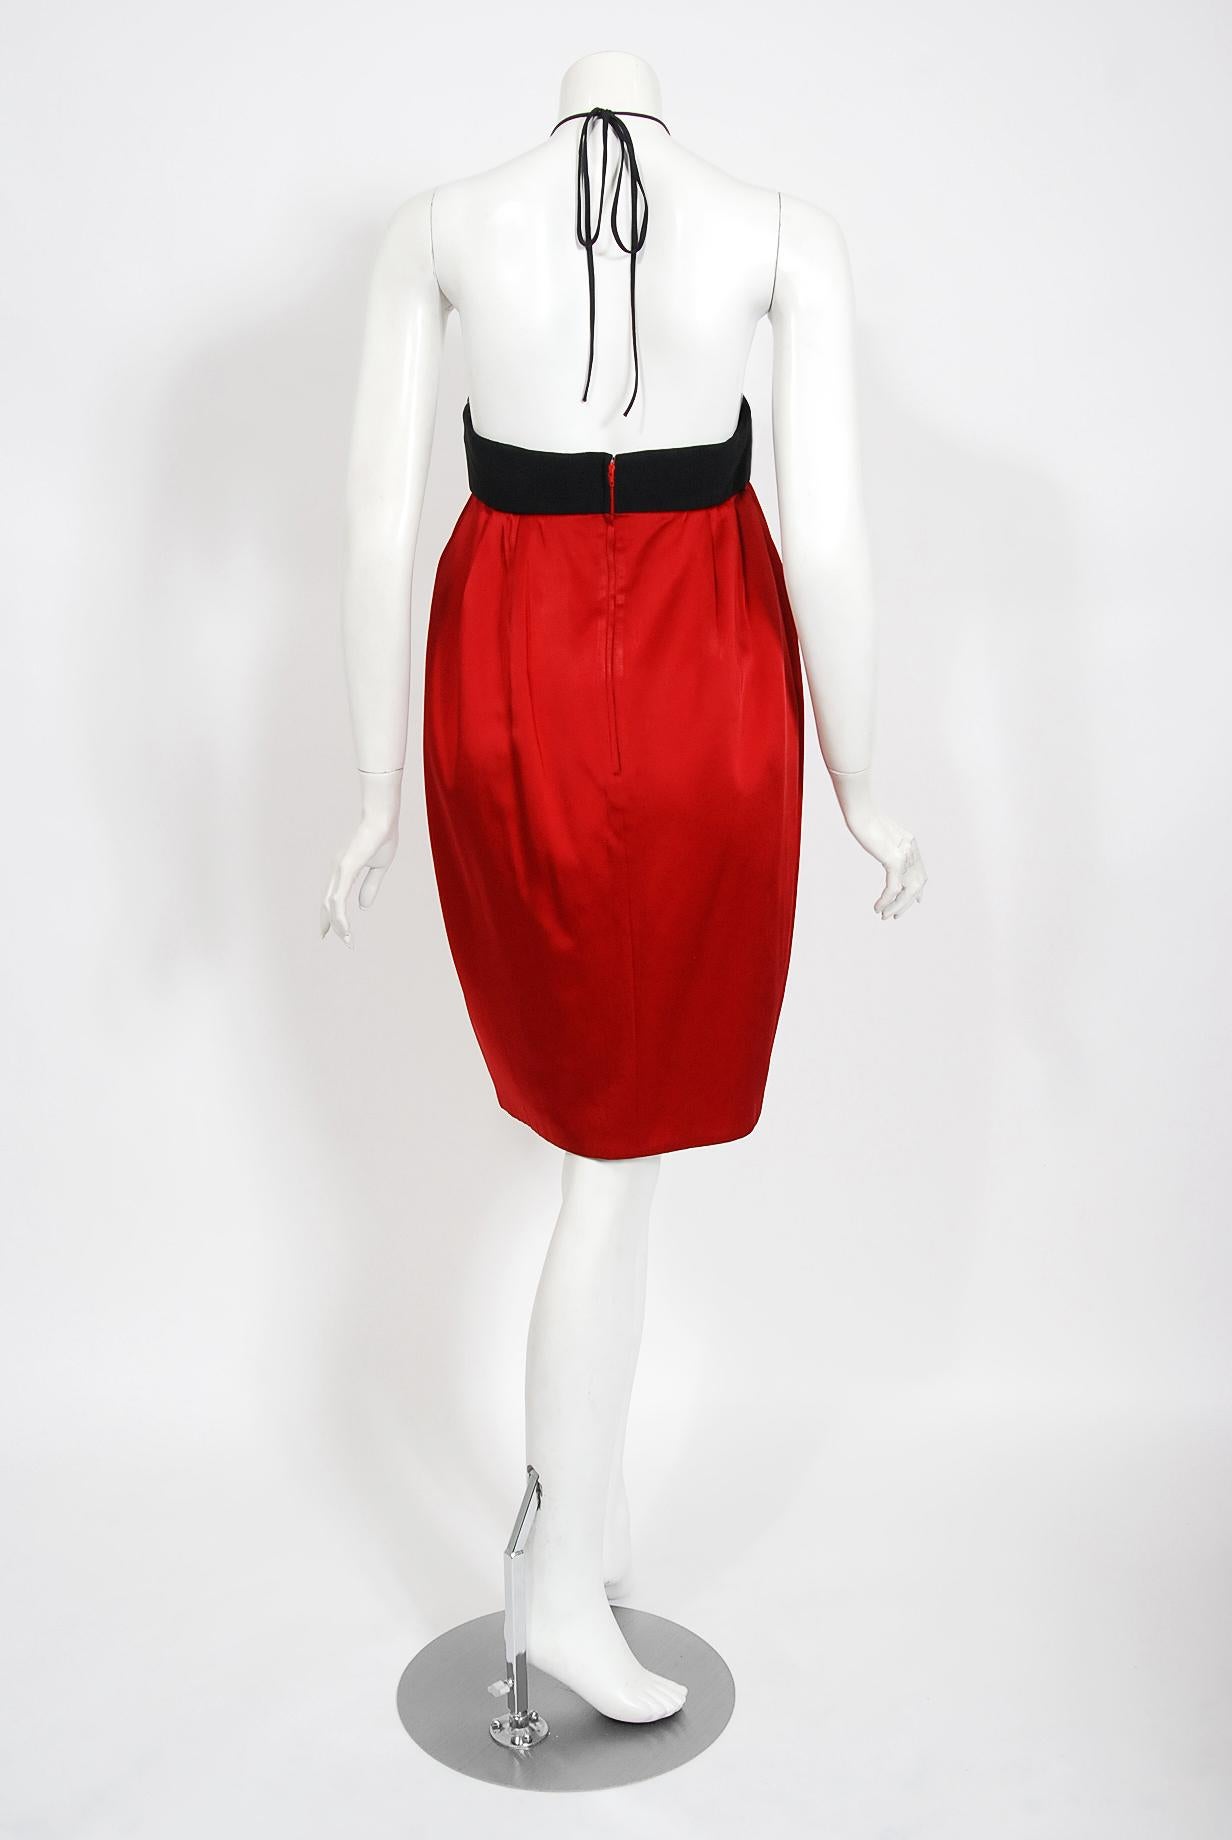 Vintage 1995 Moschino Couture 'Ladybug' Novelty Black & Red Silk Halter Dress For Sale 4